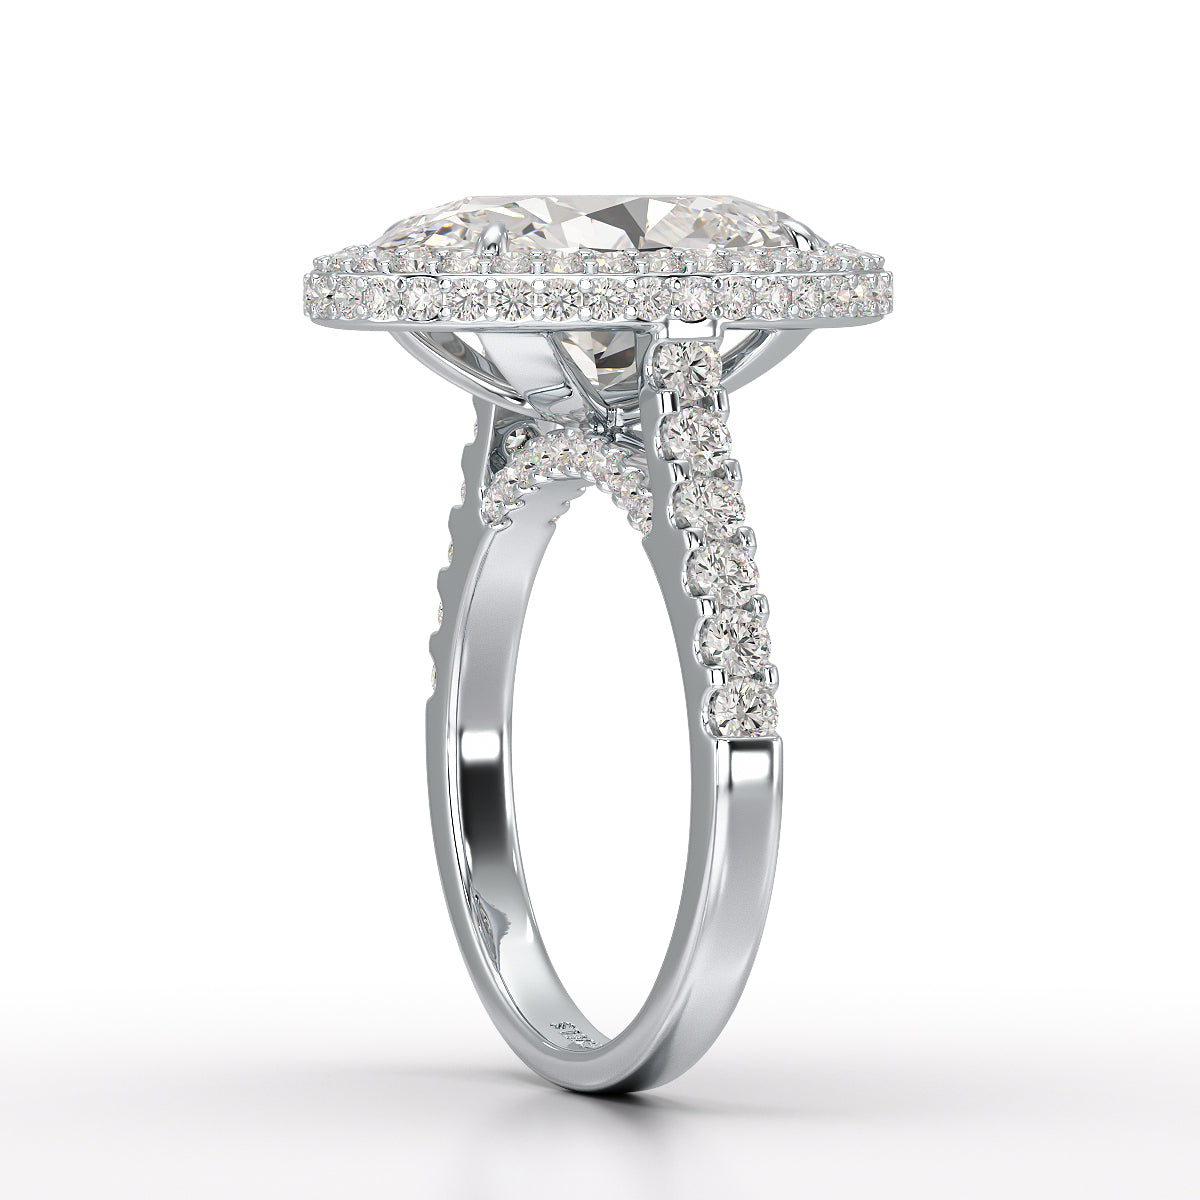 6.1 CT Oval Cut Lab Diamond Wedding Ring